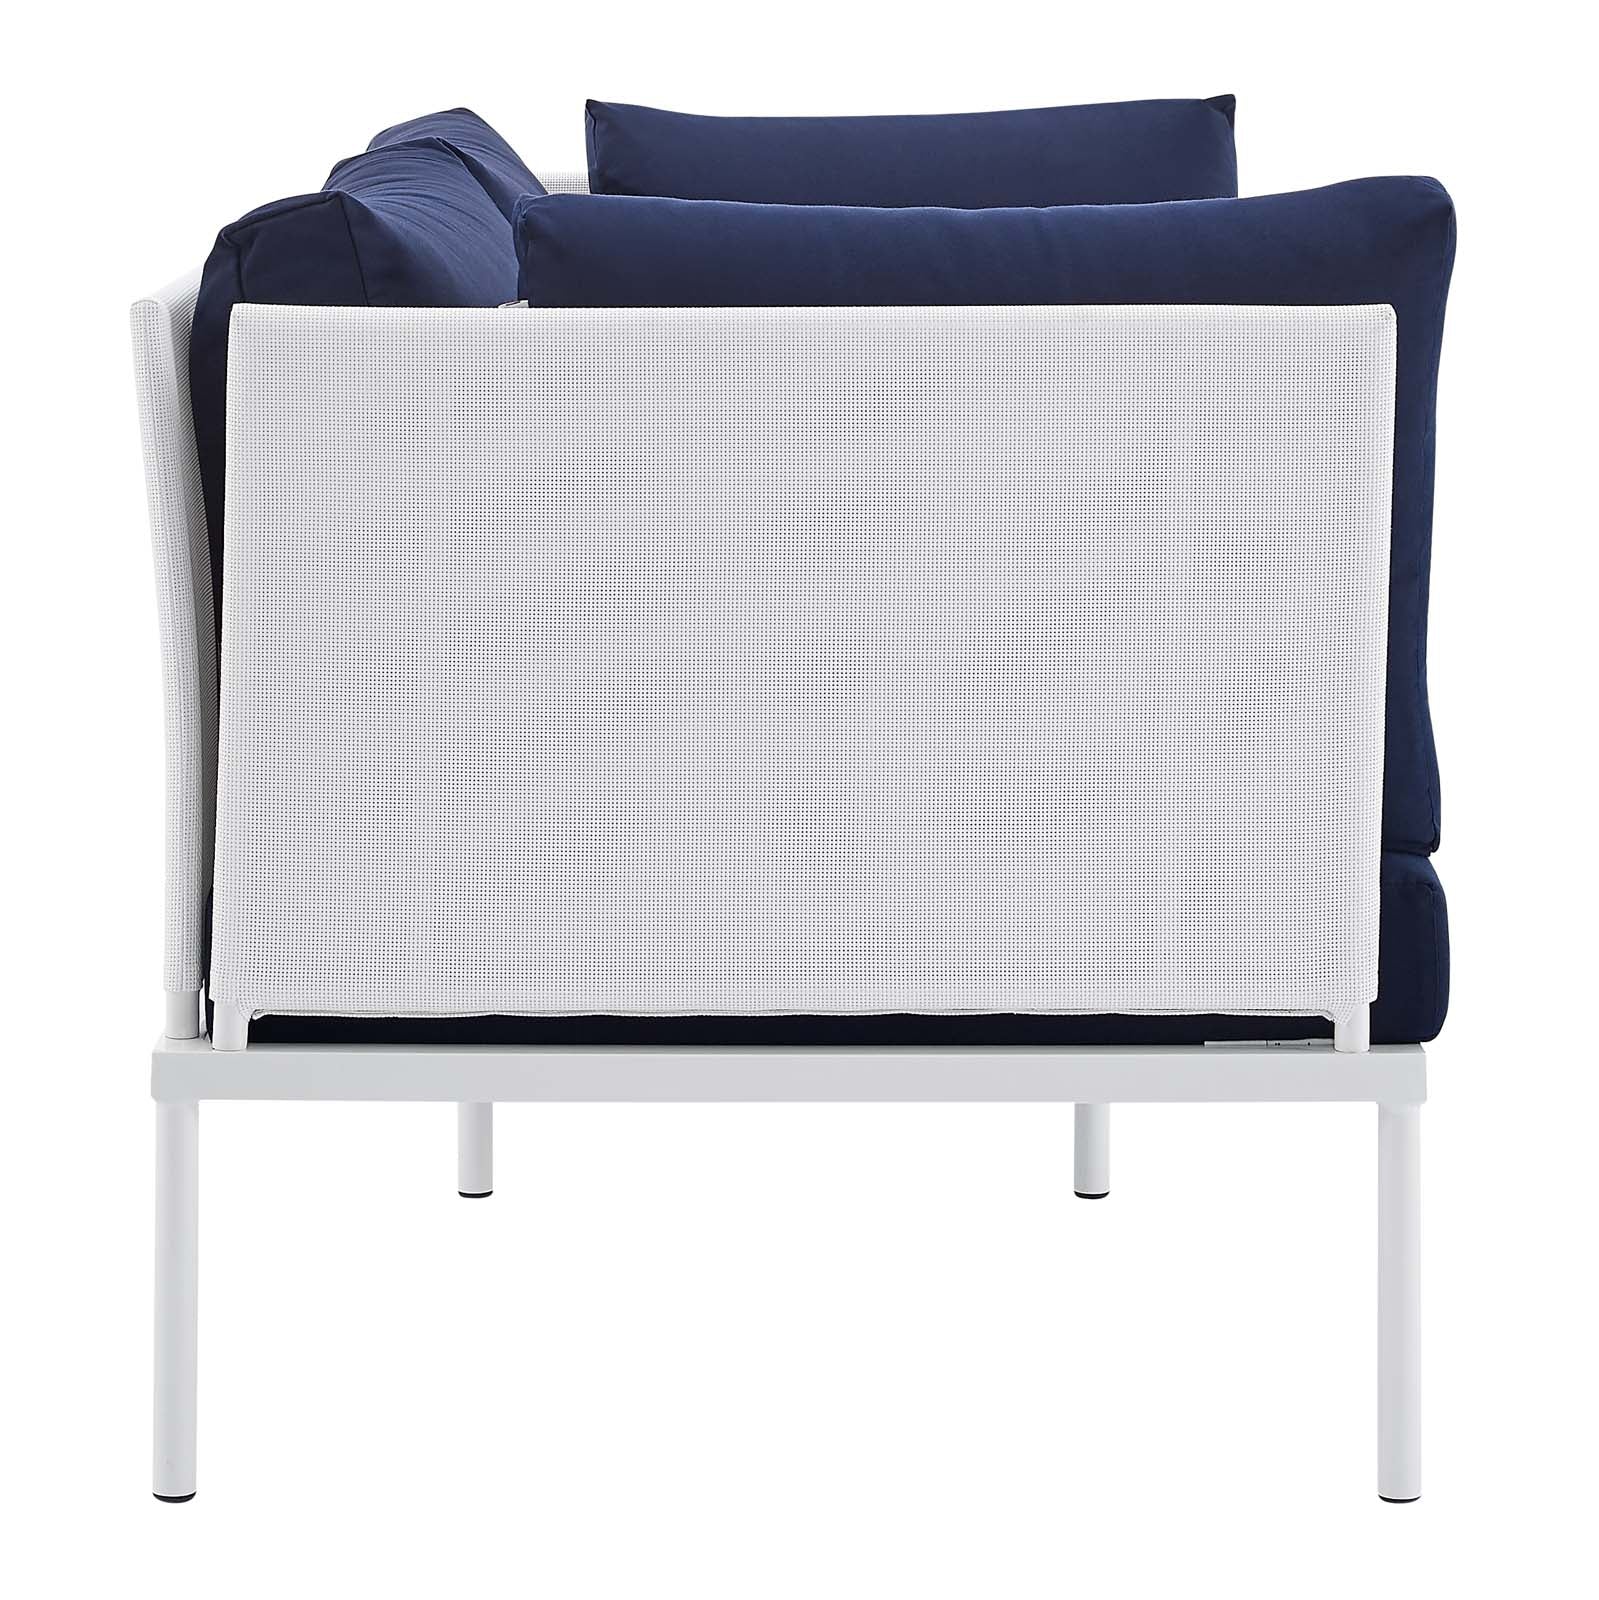 Modway Outdoor Conversation Sets - Harmony 5-Piece Sunbrella Outdoor Patio Aluminum Furniture Set White Navy